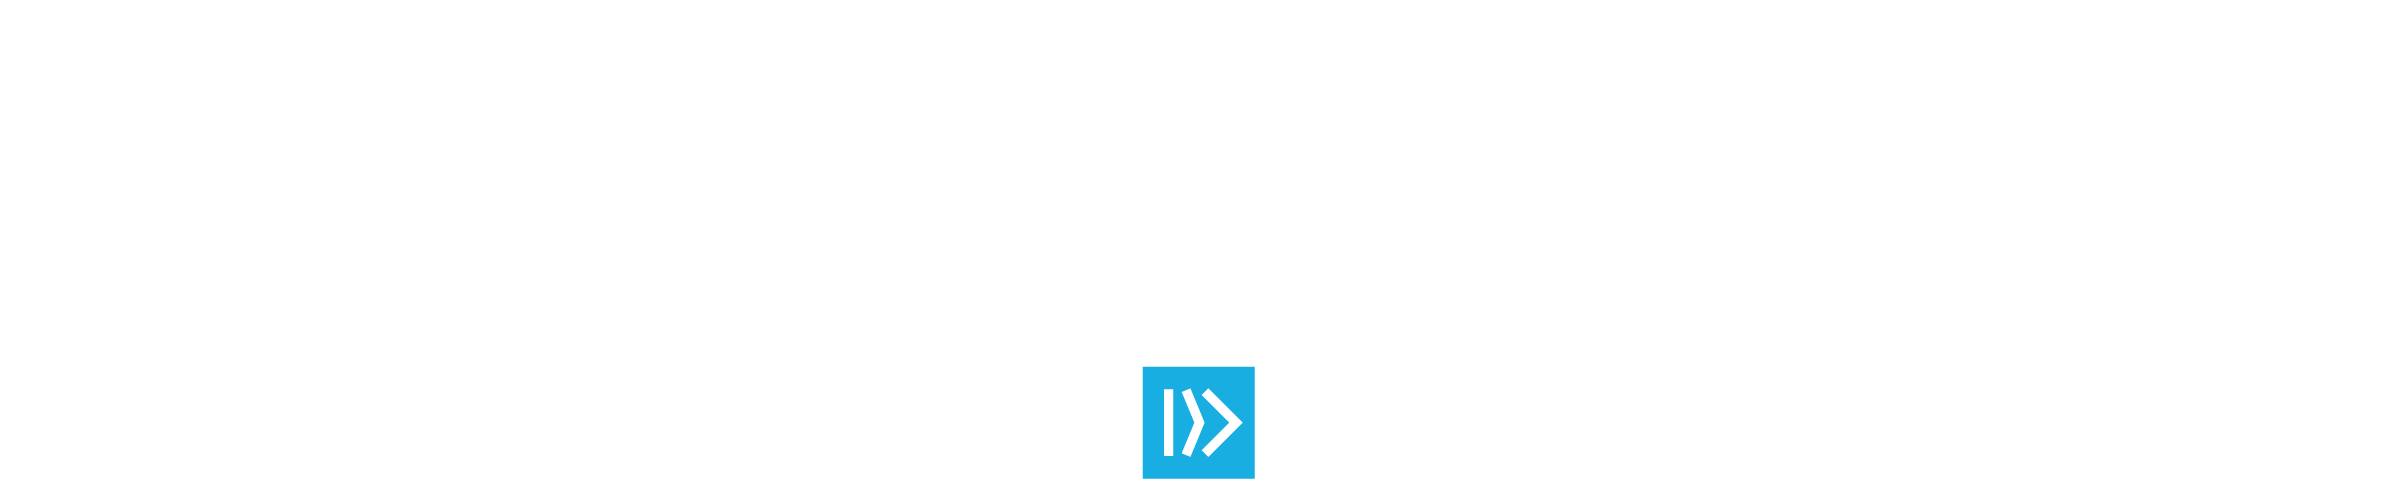 SN_Church Planter Global Vision Trips Logo_Brandmark Solid_WhiteBlue_RGB (2)